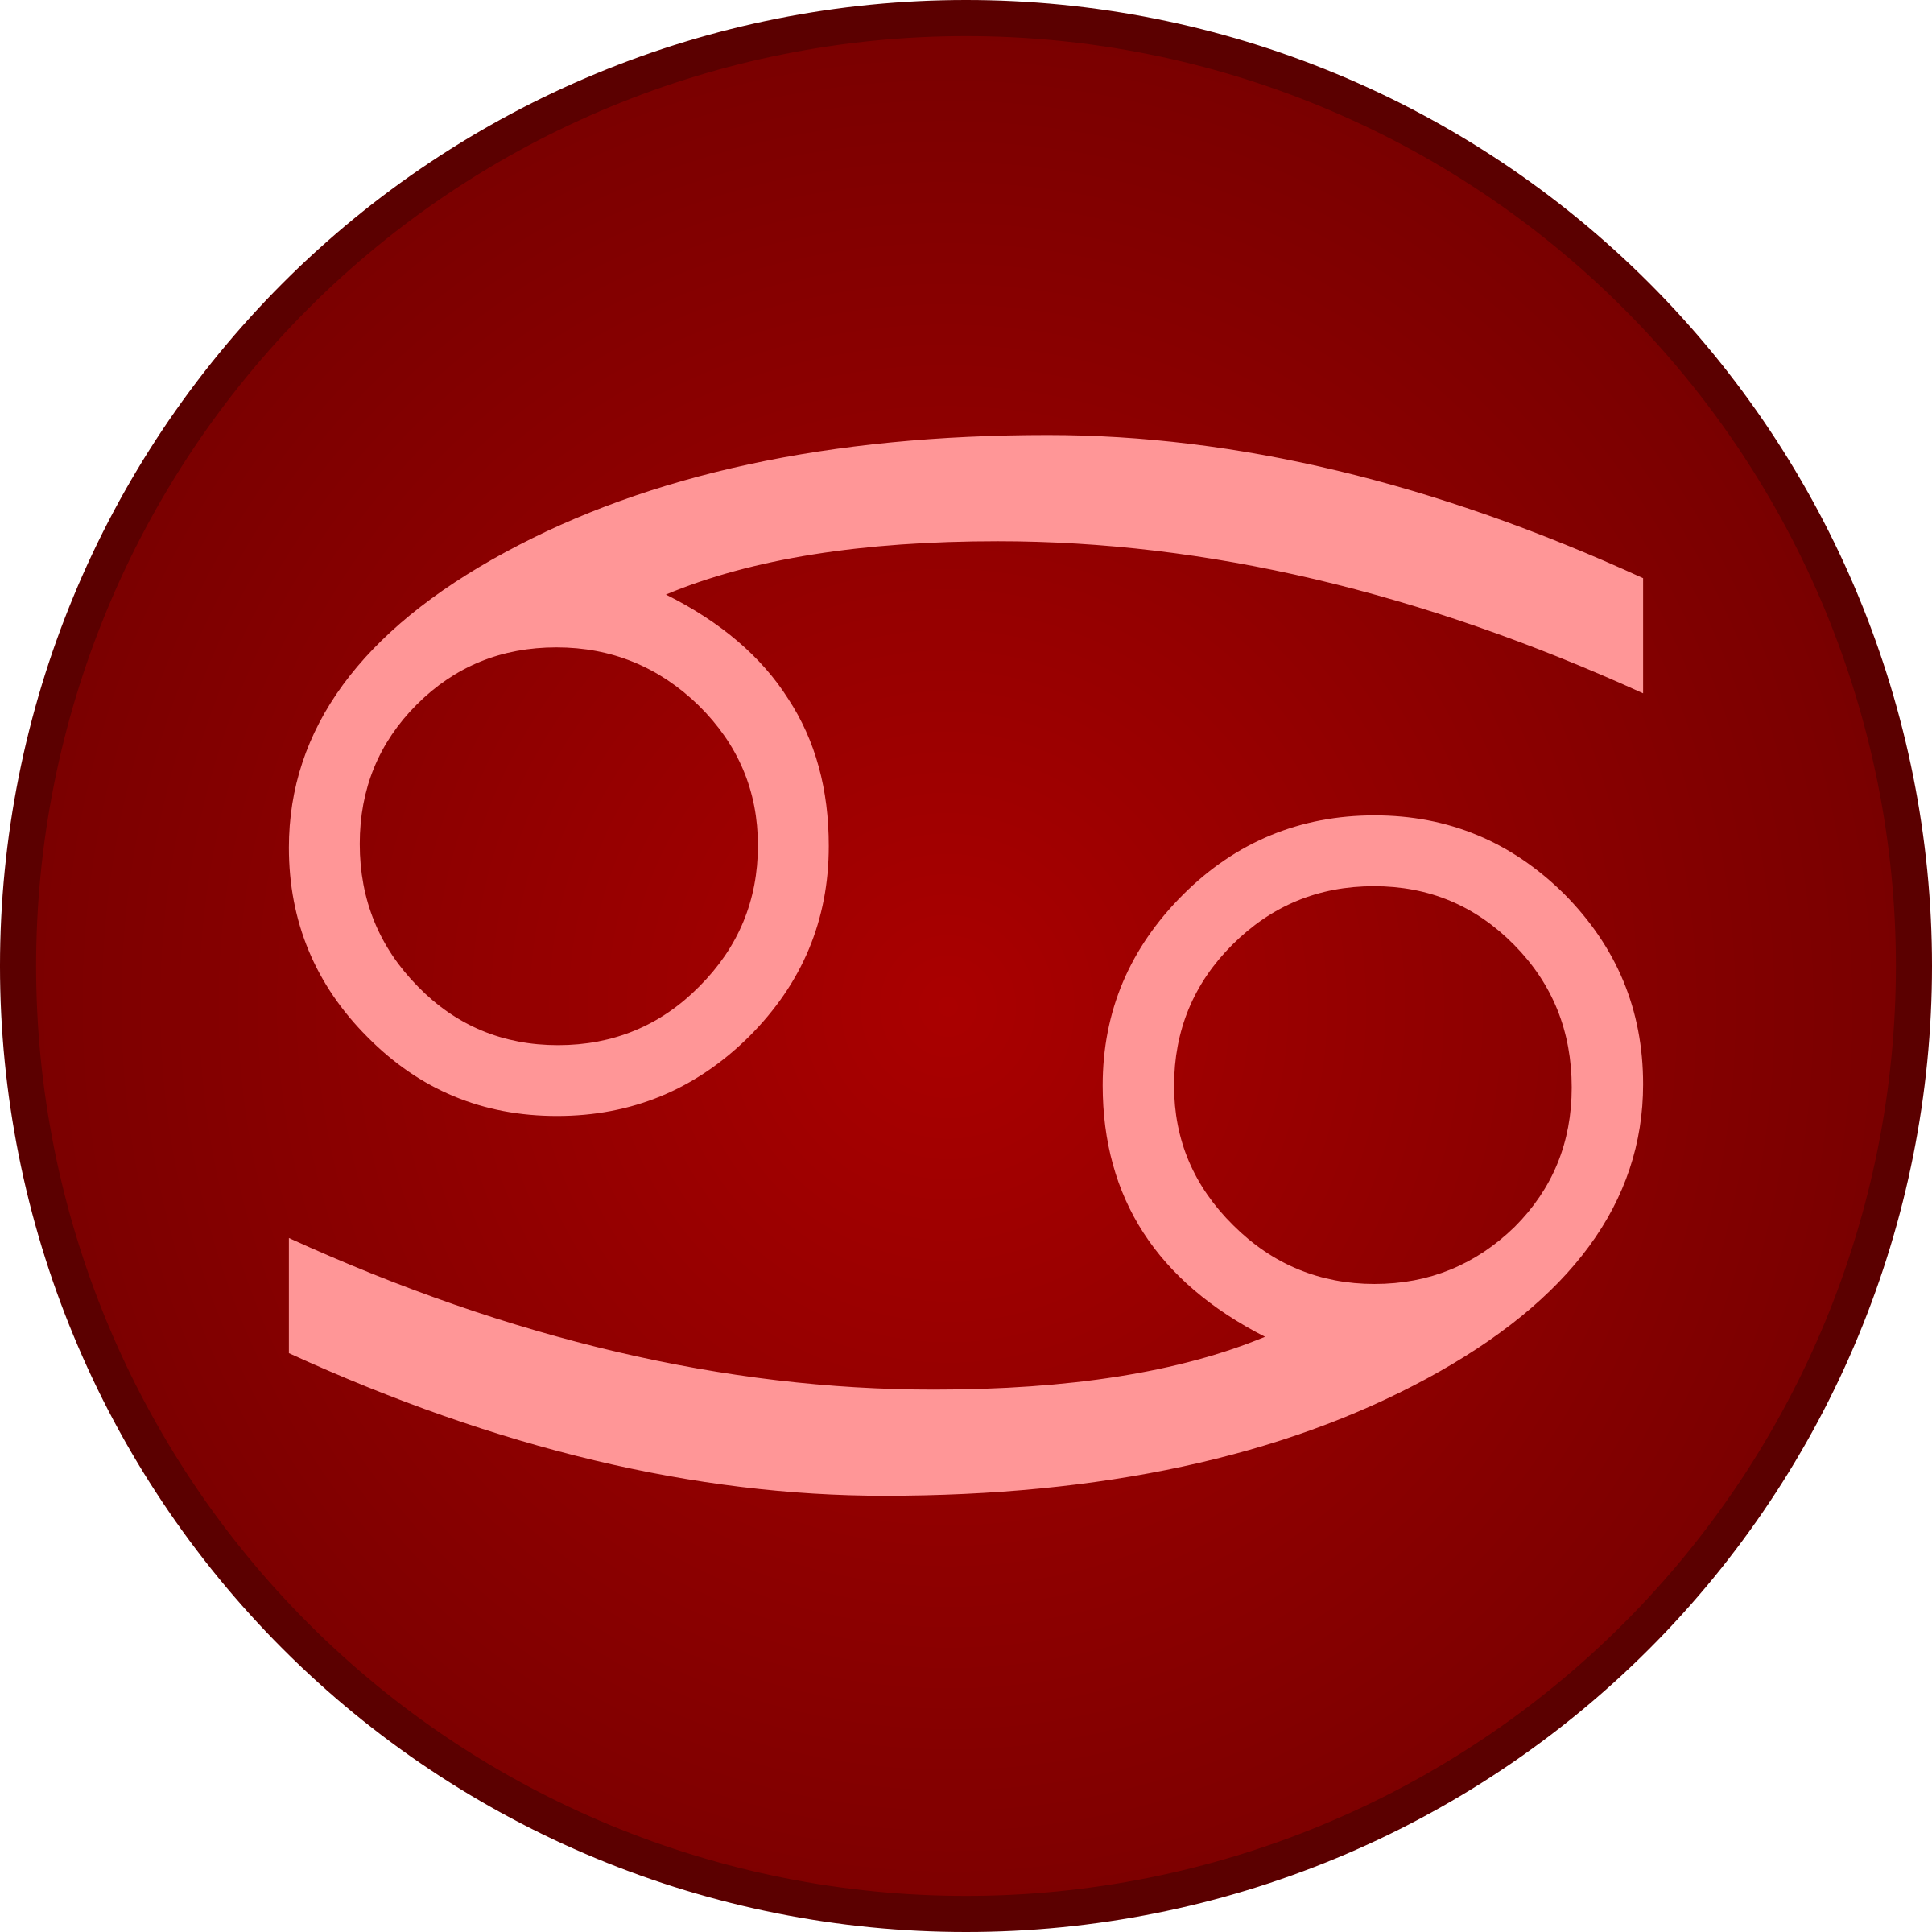 Clipart - Cancer symbol